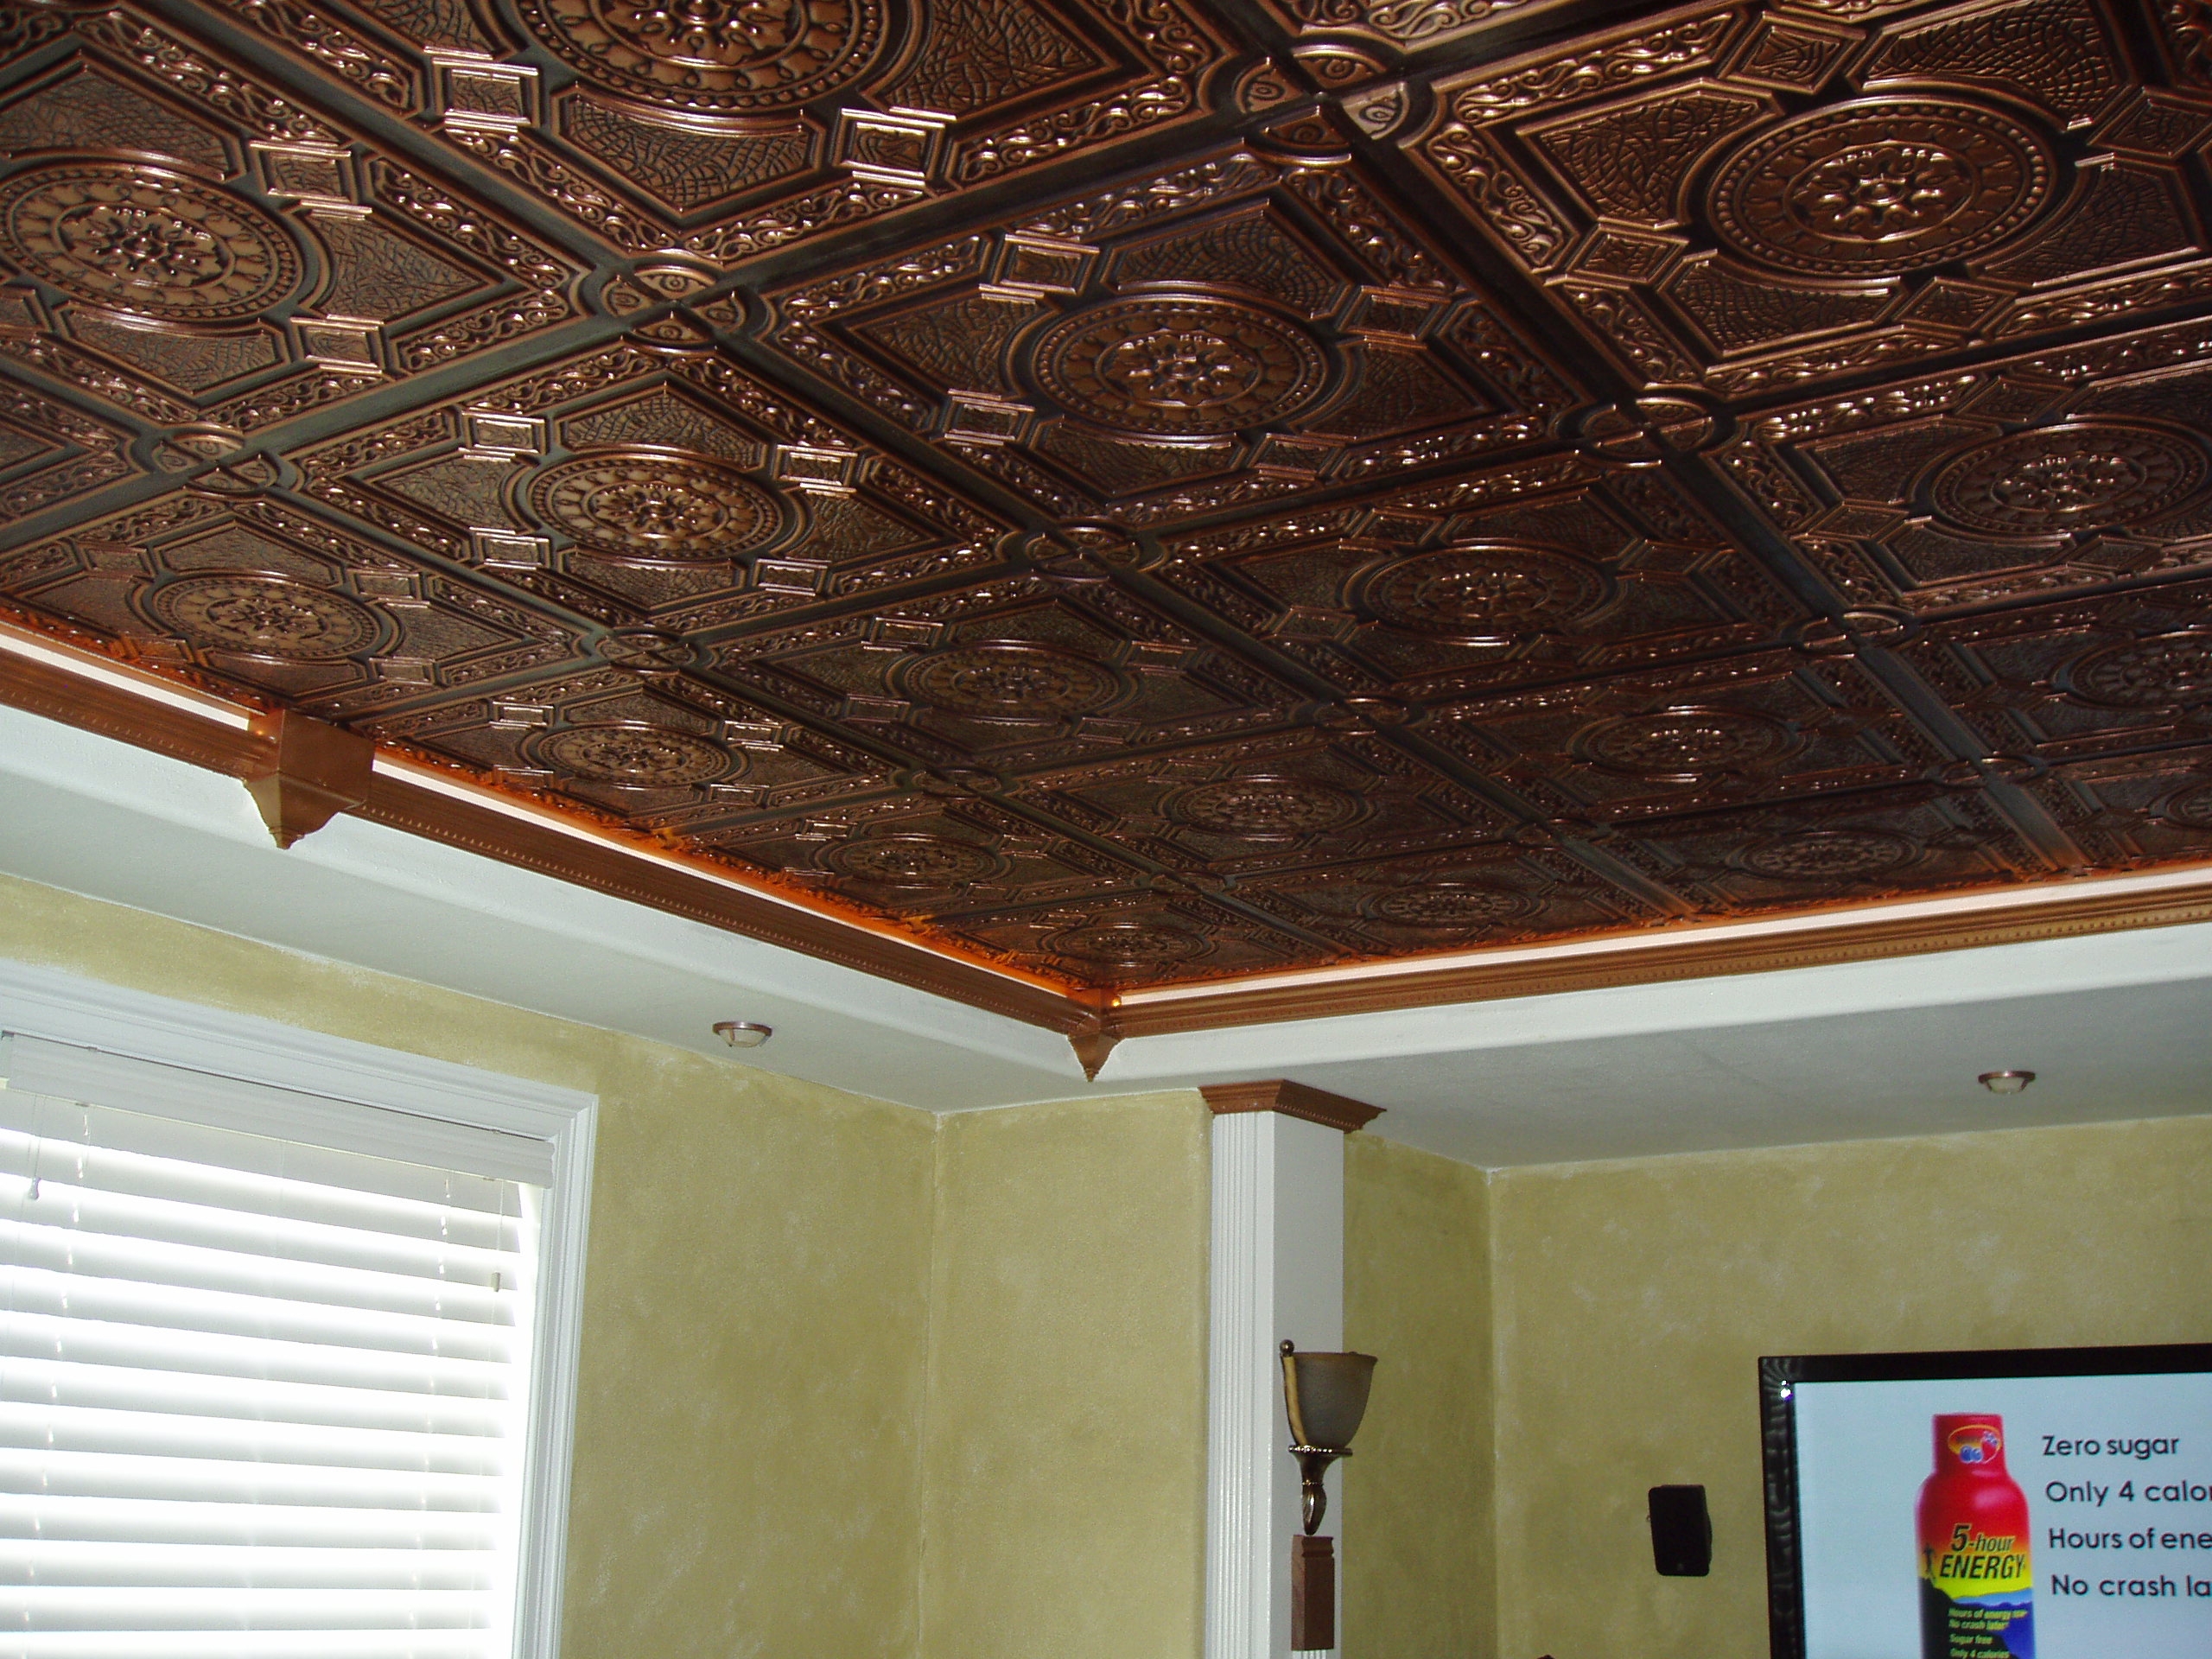 Glue Up Faux Tin Ceiling Tiles Glue Up Faux Tin Ceiling Tiles interior faux tin ceiling tiles glue up ceiling tiles tin 2560 X 1920